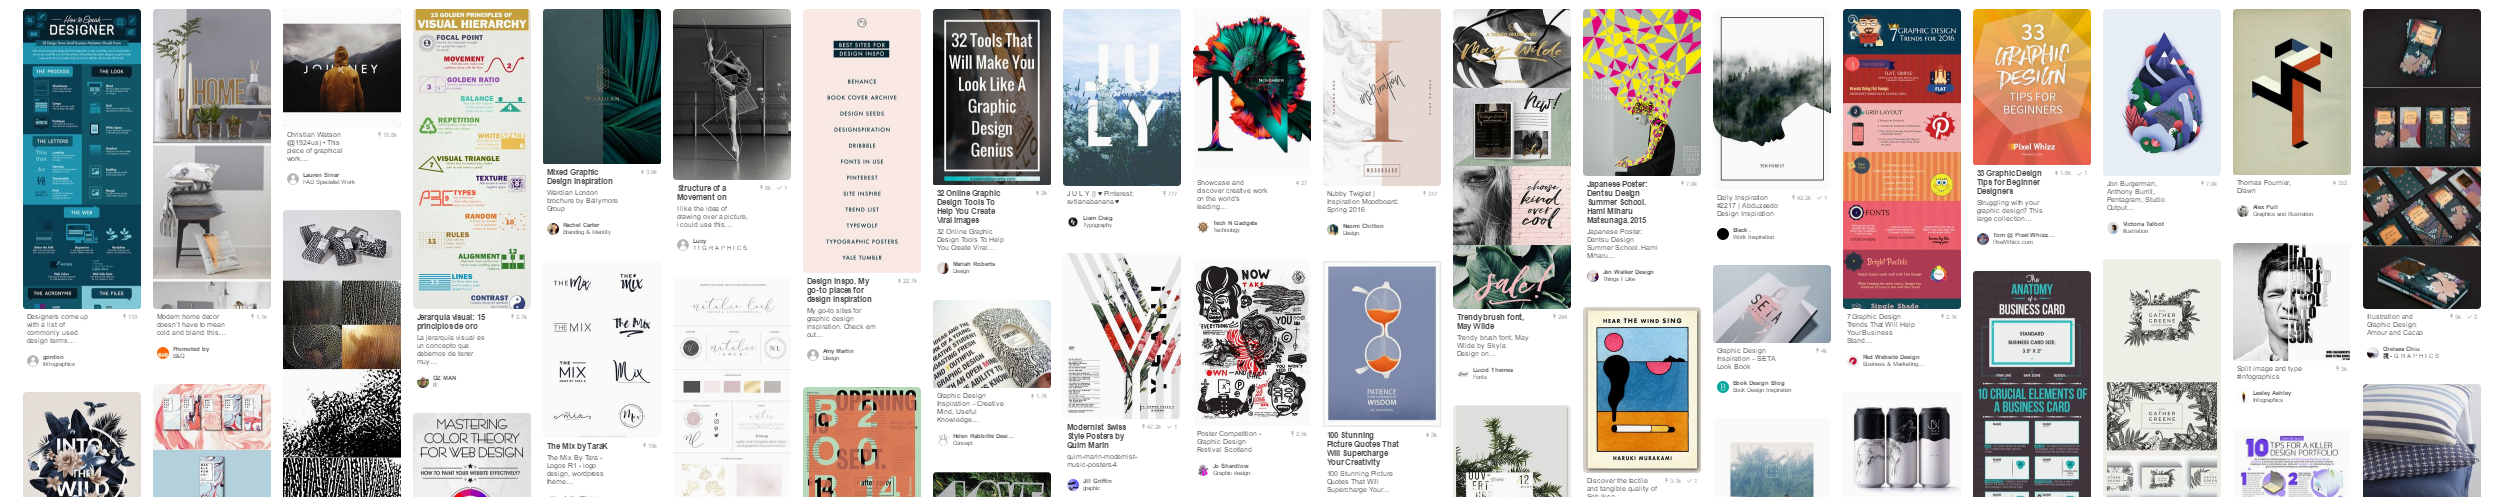 Pinterest Collage